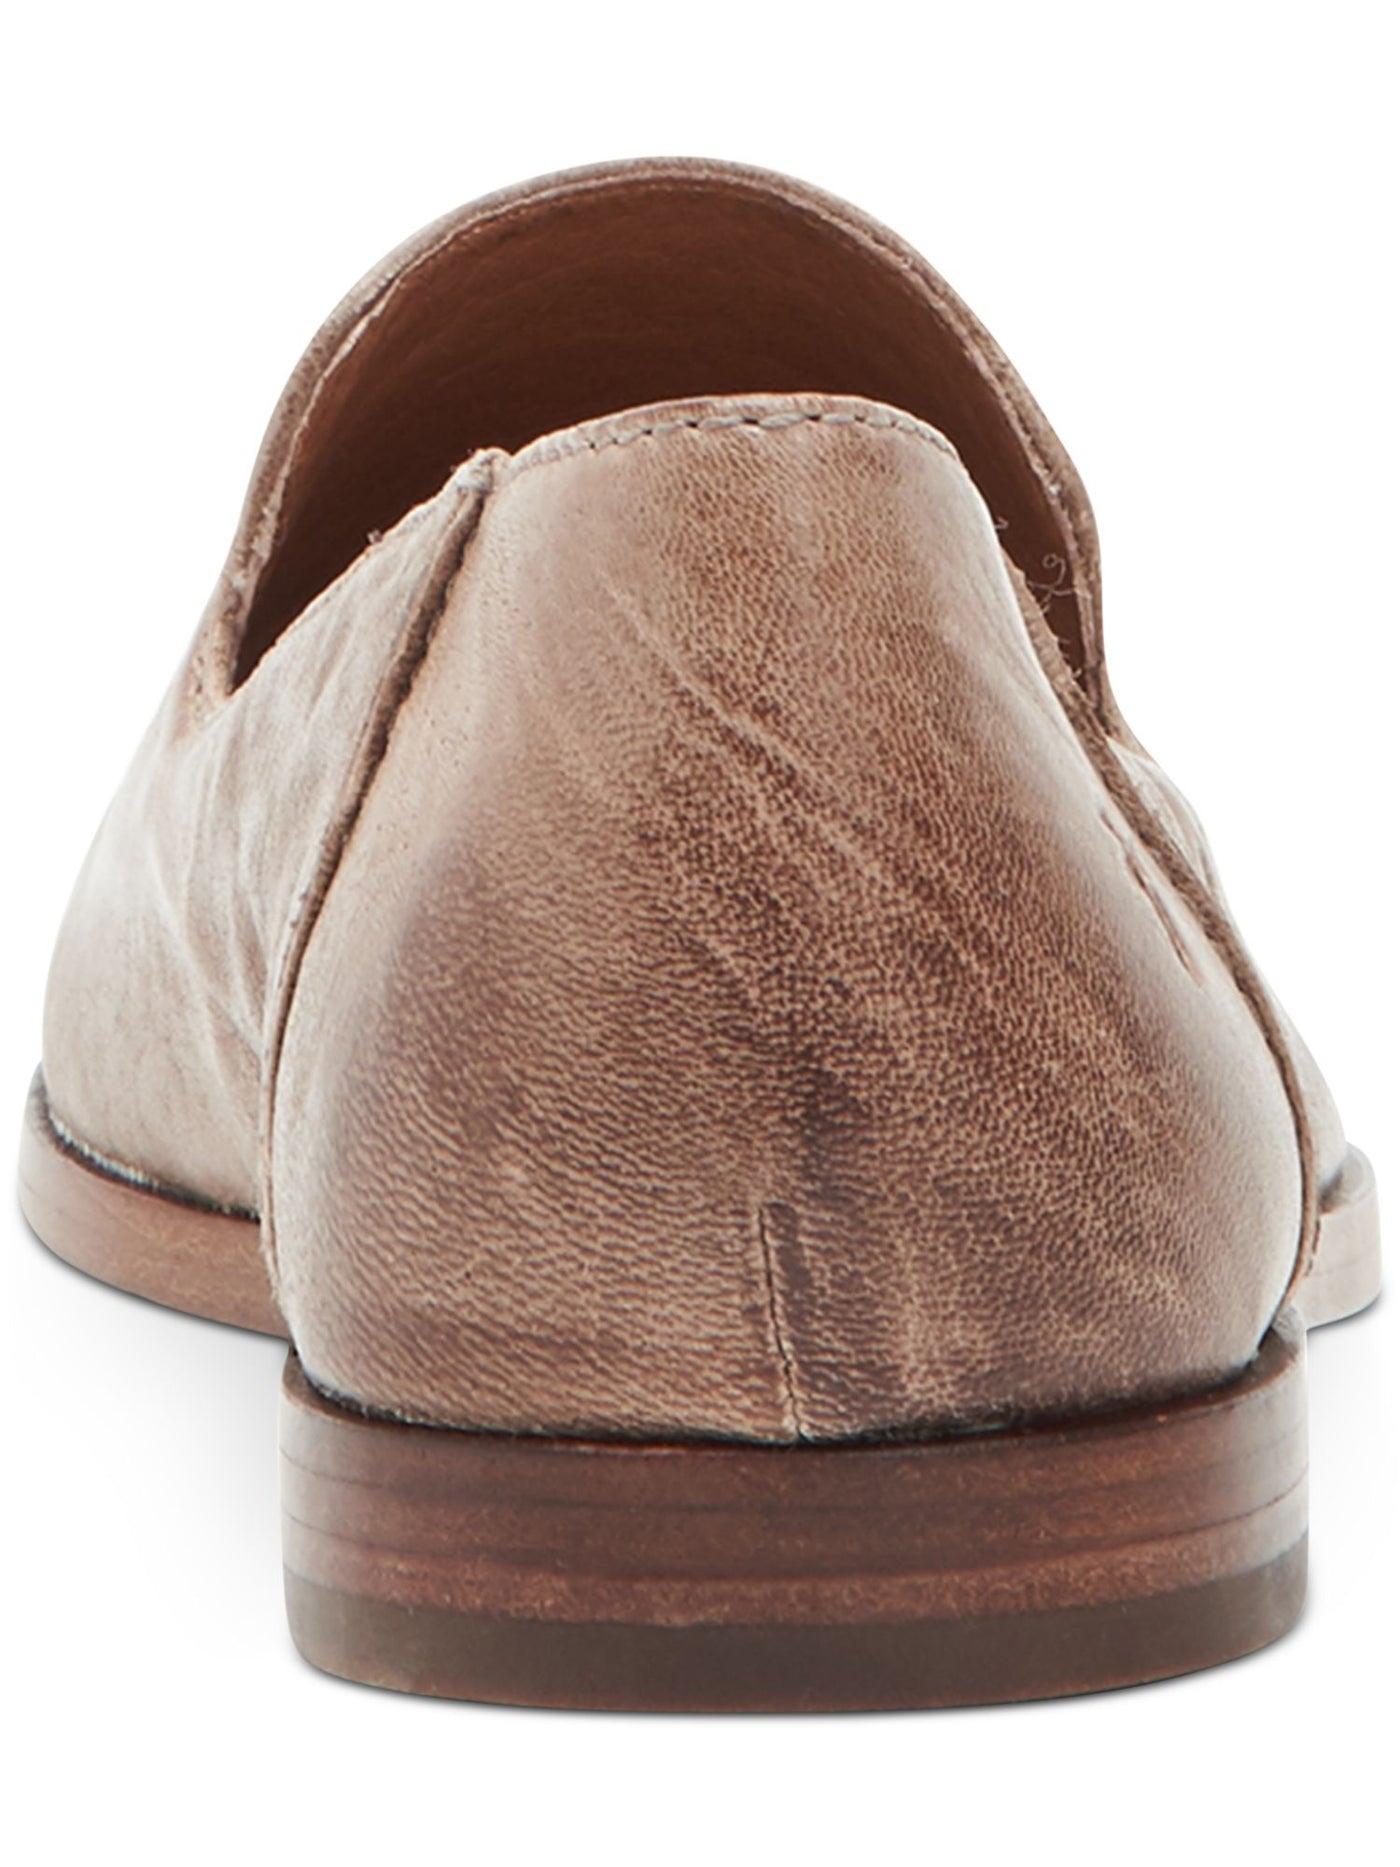 FRYE Womens Beige Comfort Kenzie Pointed Toe Block Heel Slip On Leather Loafers 7.5 M